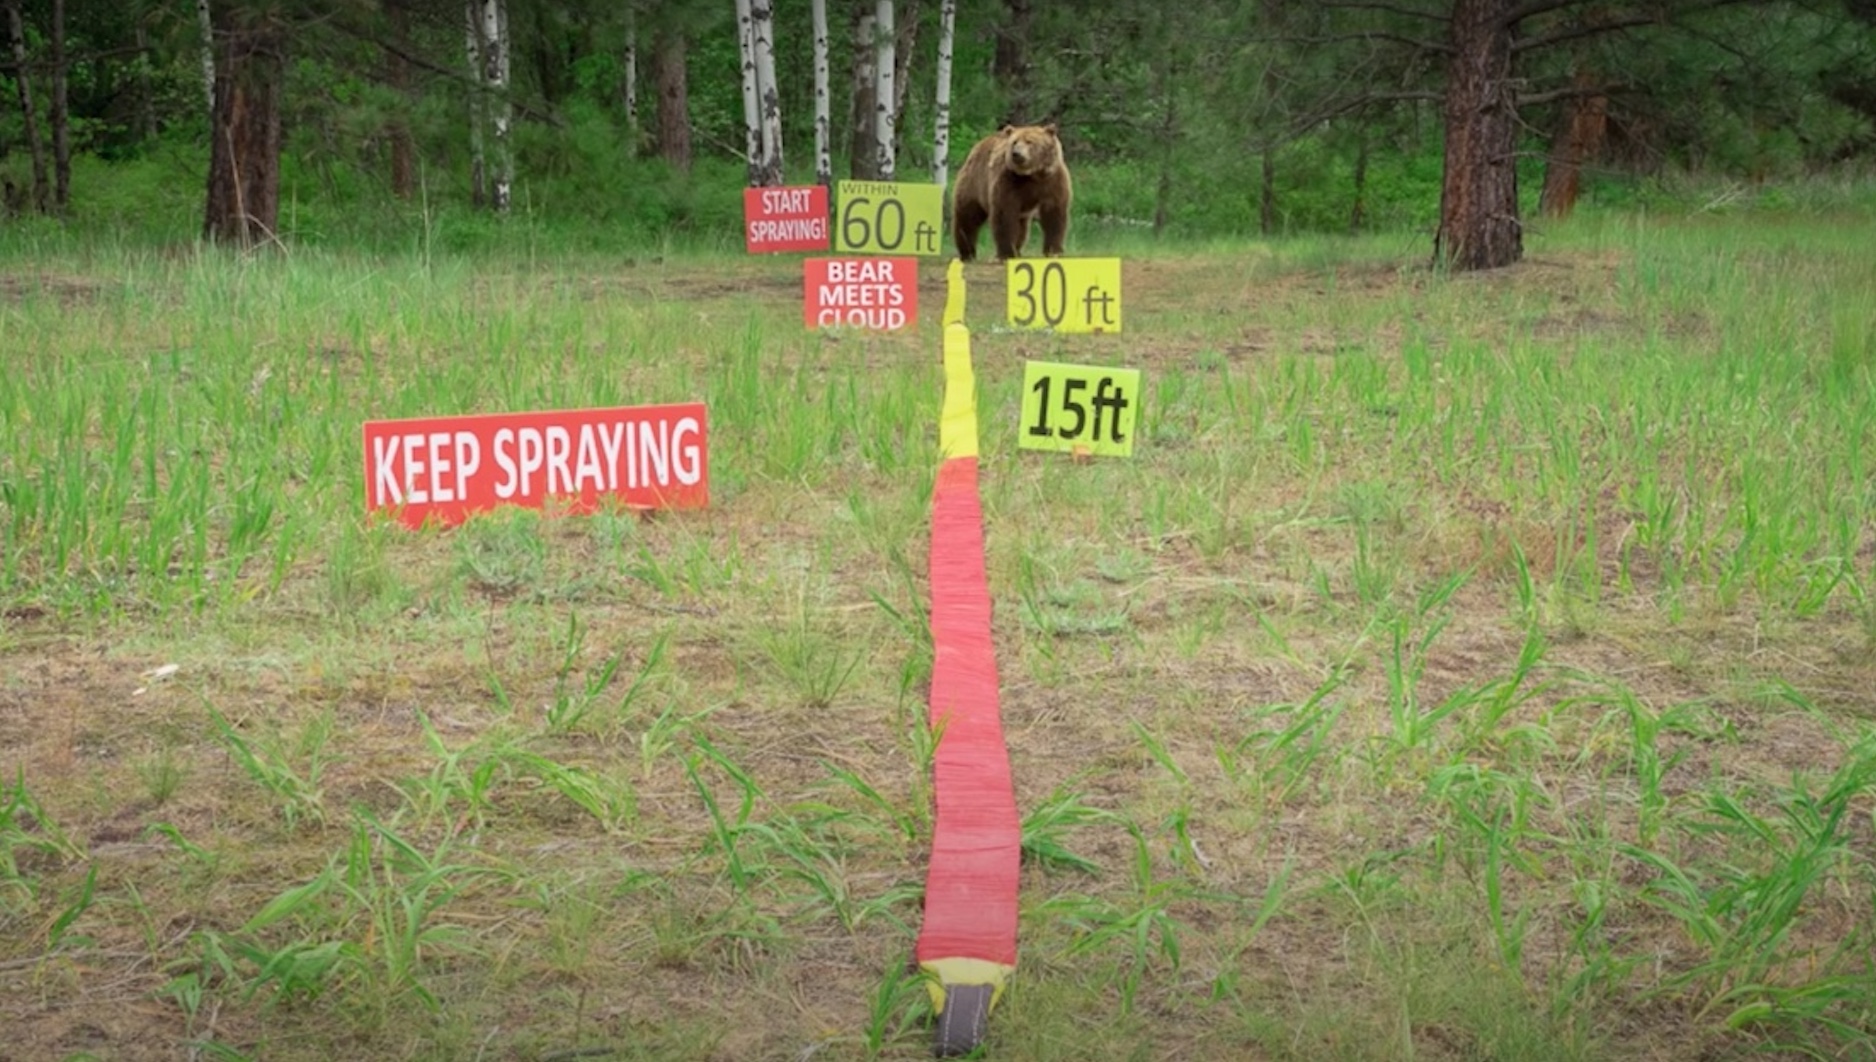 WATCH: How To Properly Deploy Bear Spray